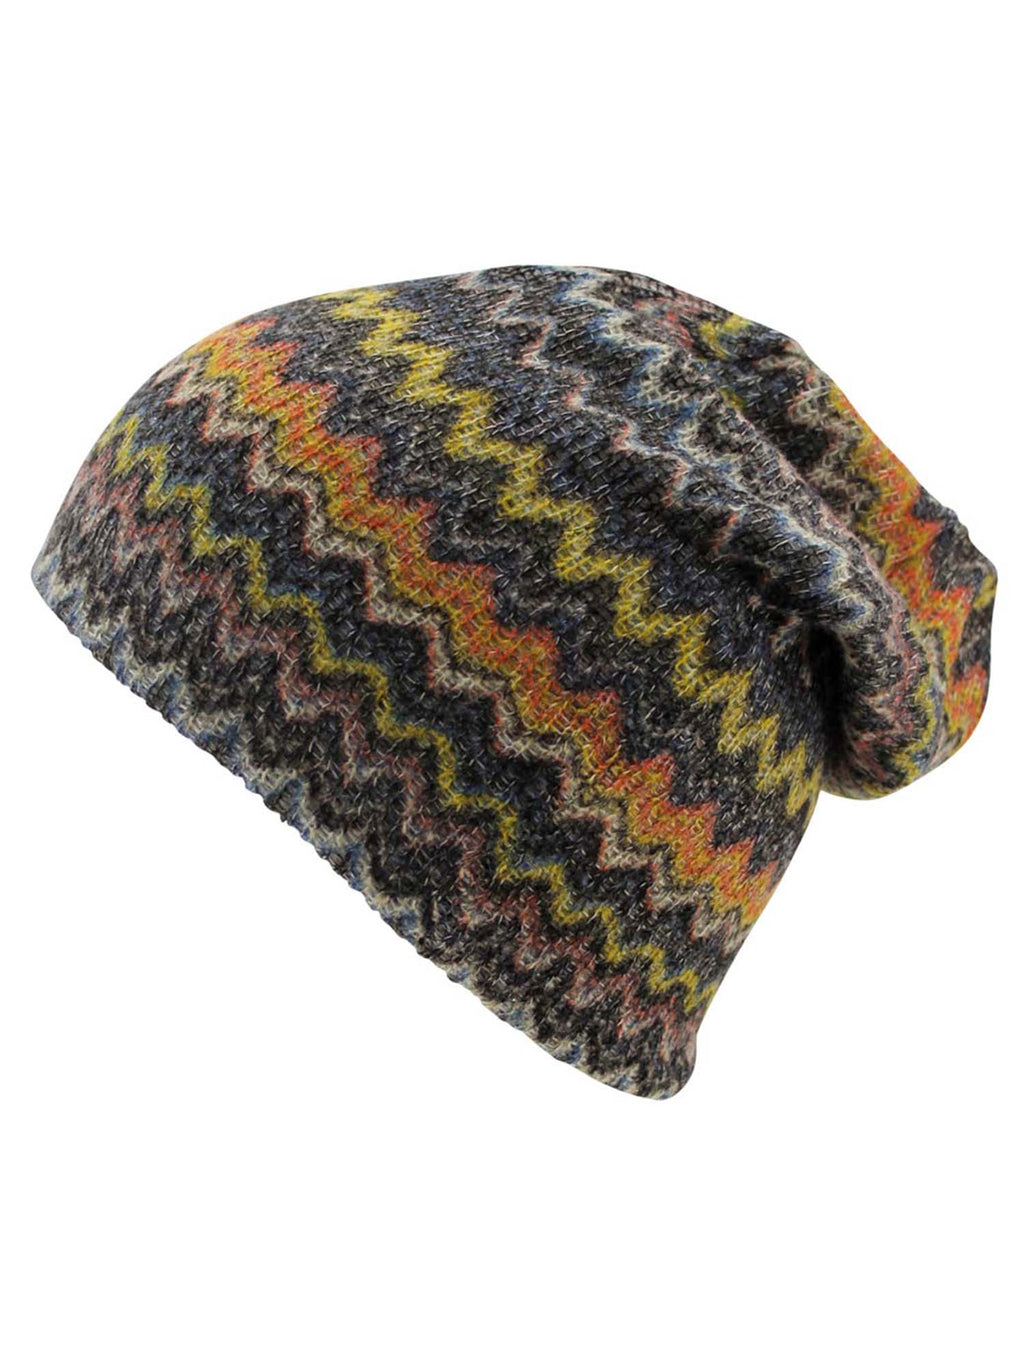 Chevron Stripe Slouchy Knit Beanie Cap Hat